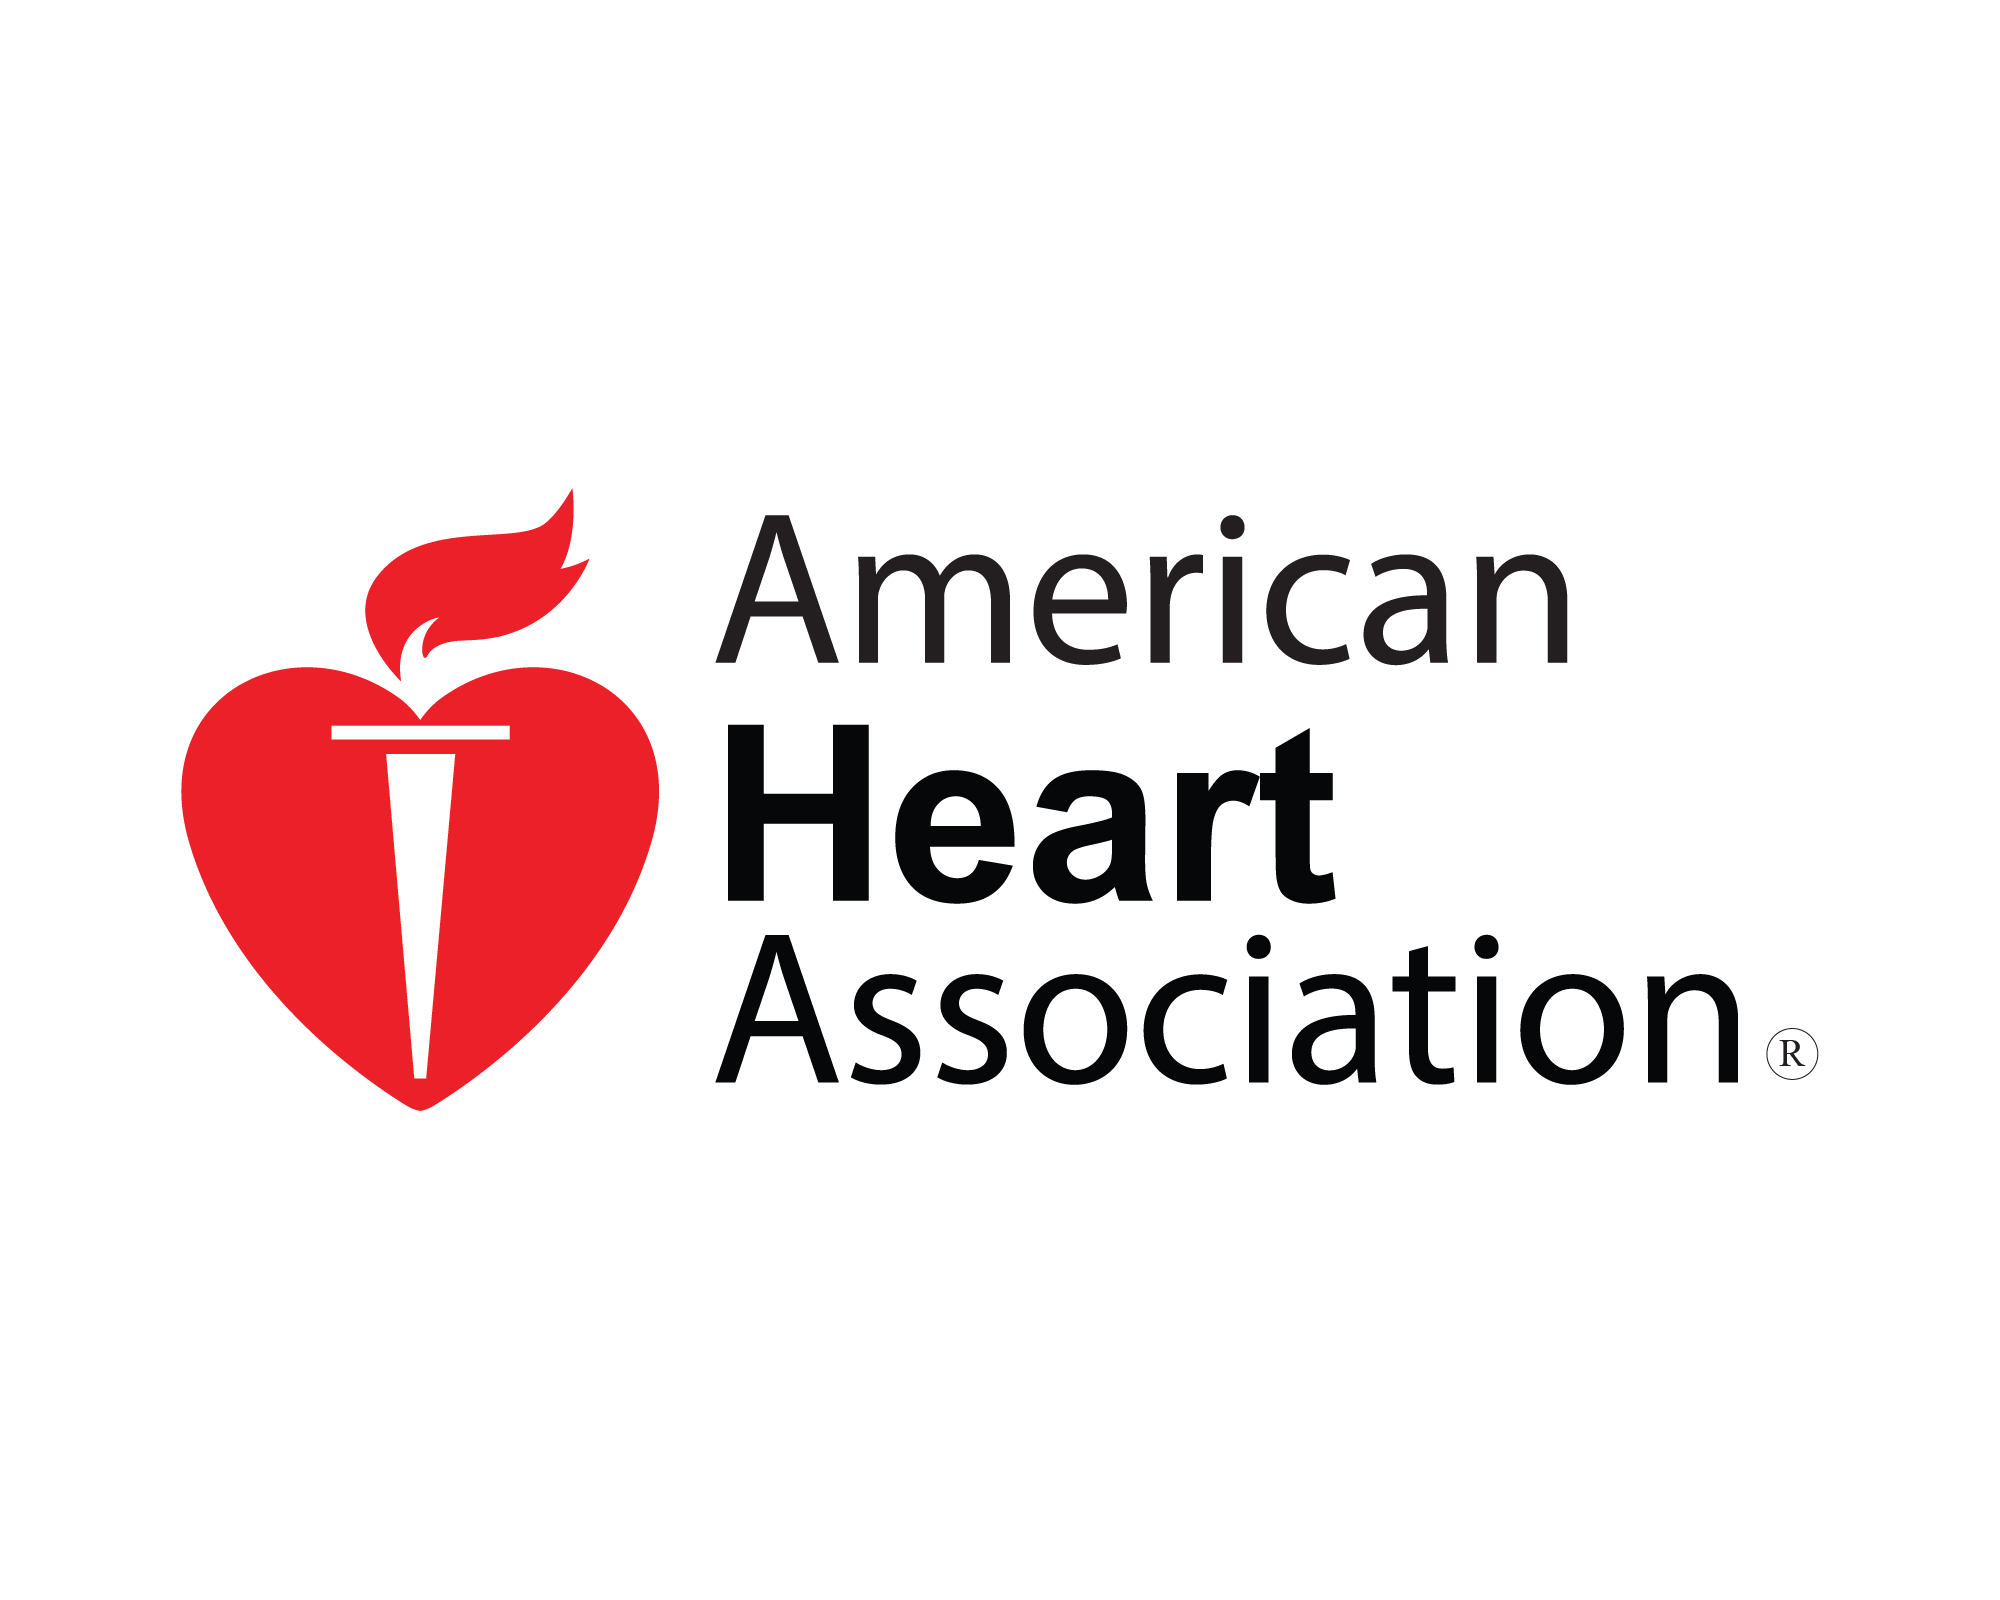 Американ Харт Ассоциация. Американская кардиологическая Ассоциация. Амеркианскоая Ассоциация кардиоо. Логотип American Heart Association. American heart